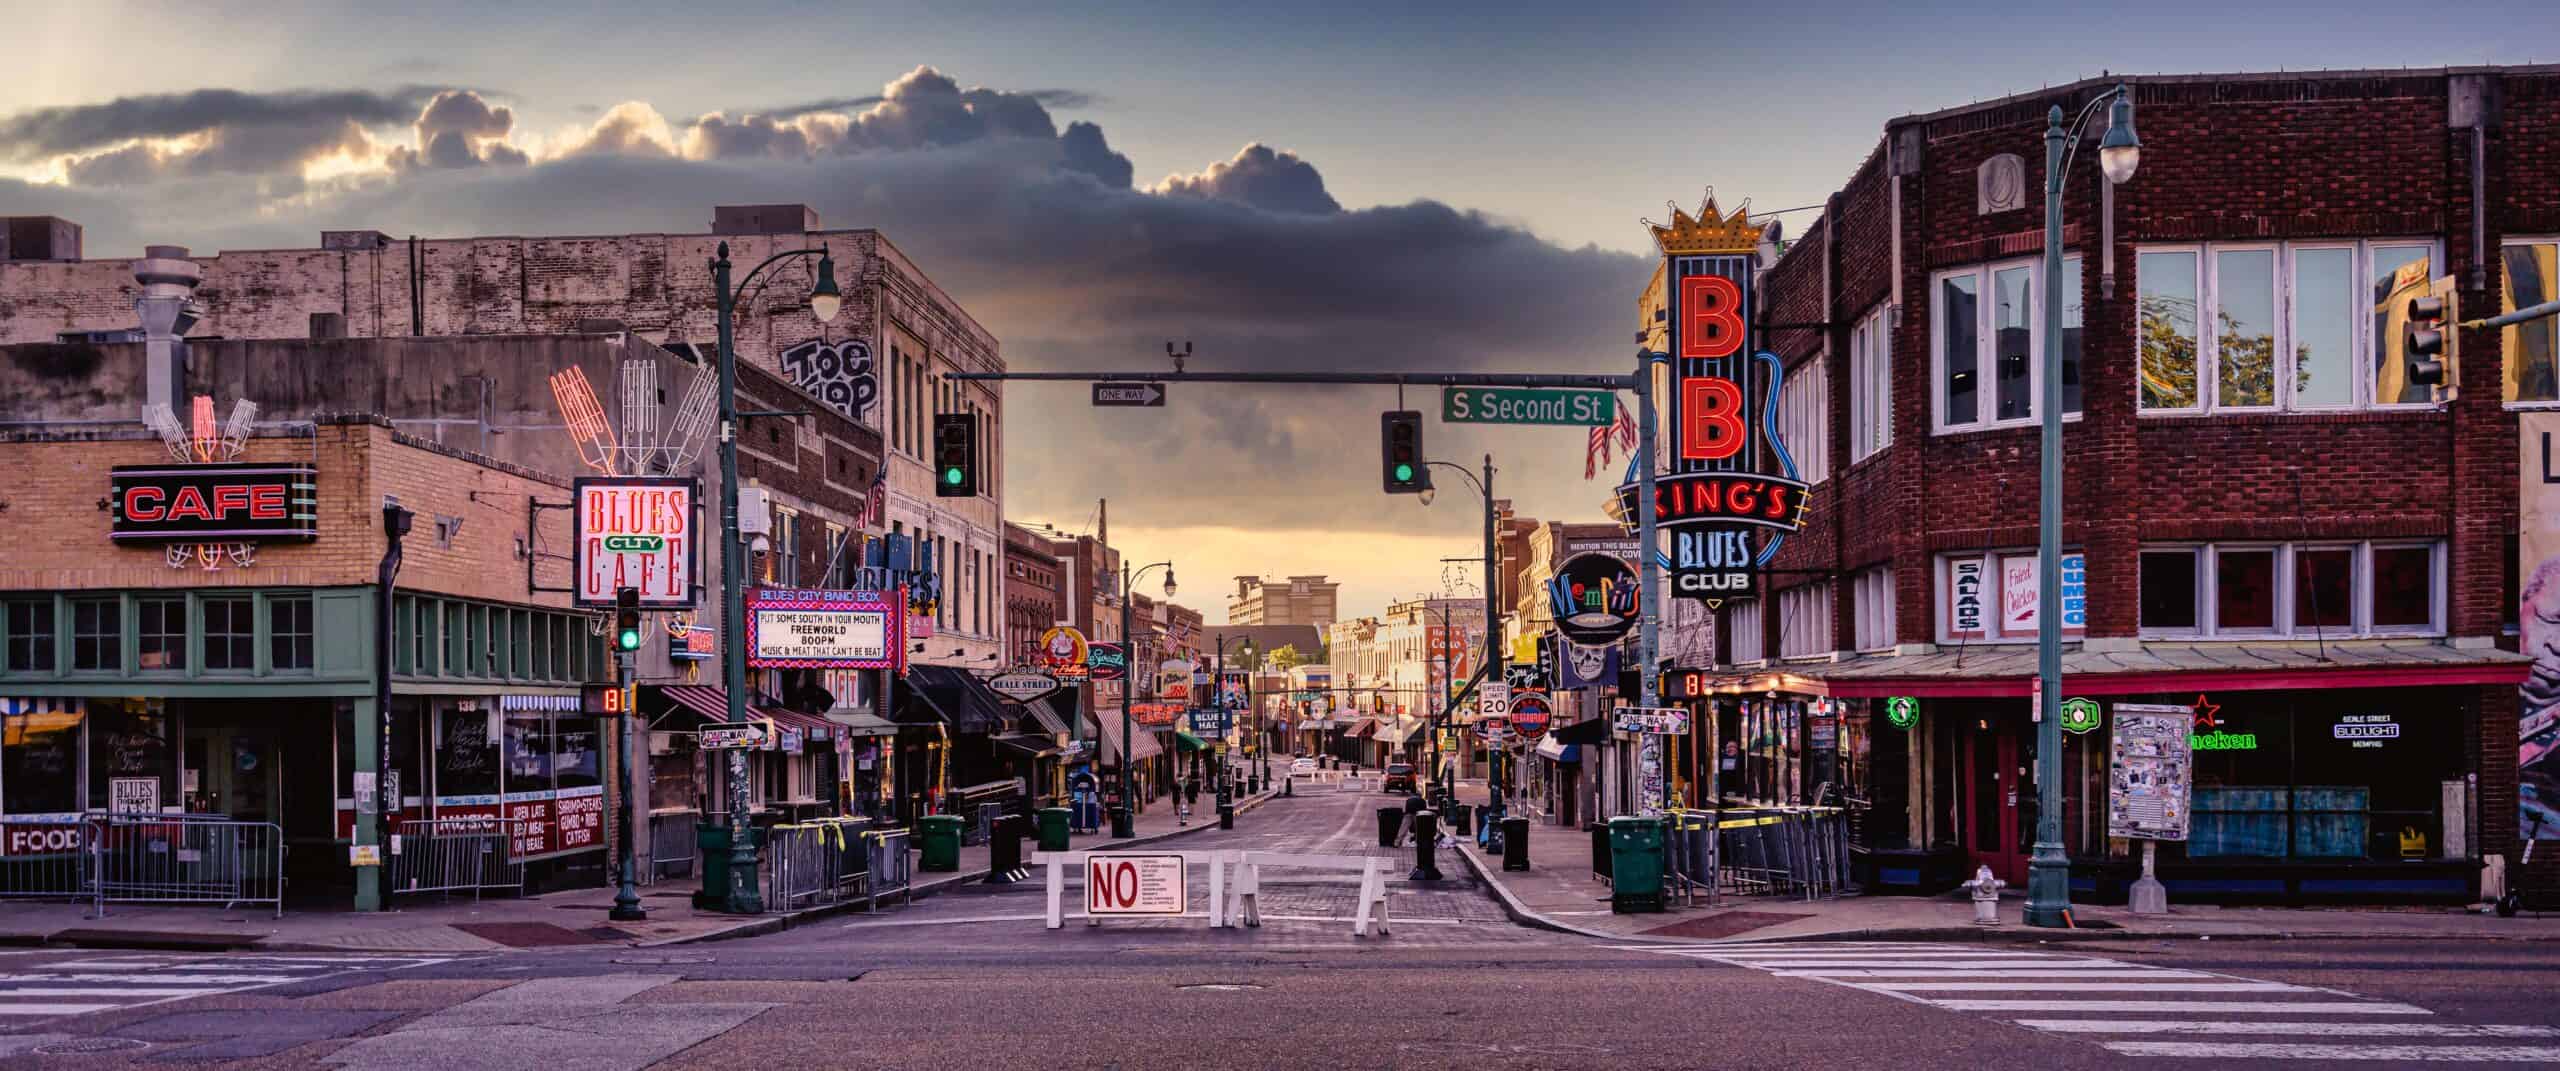 Memphis+Tennessee | Beale Street Memphis Morning